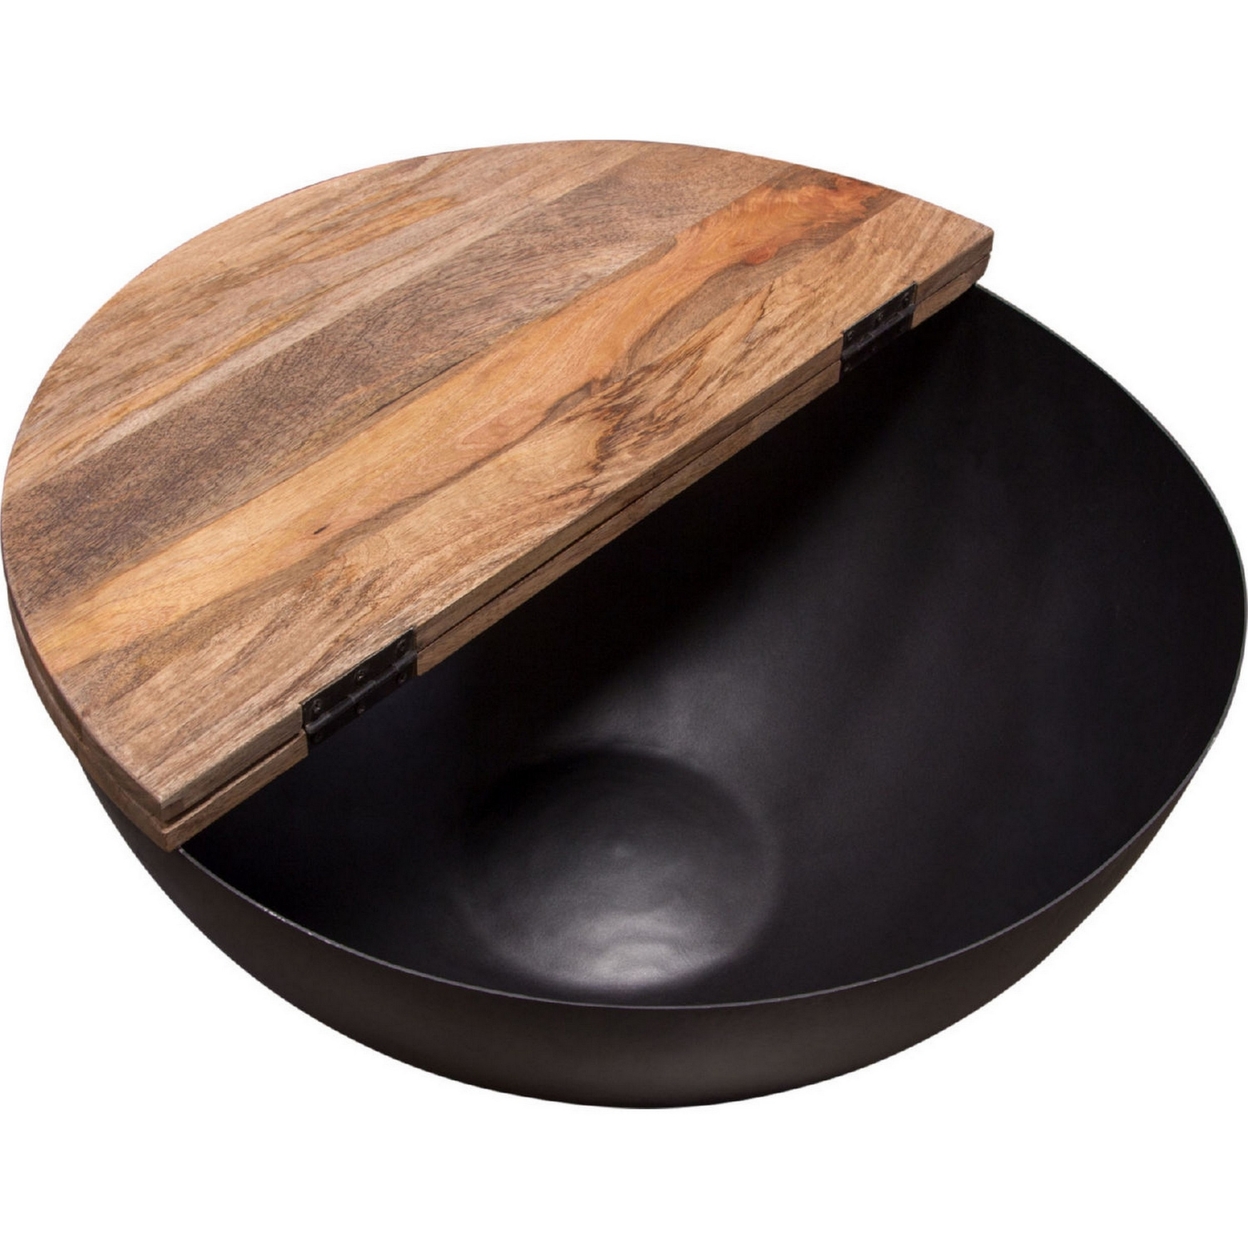 28 Inch Storage Coffee Table, Round Drum Silhouette, Brown Wood, Black Base- Saltoro Sherpi